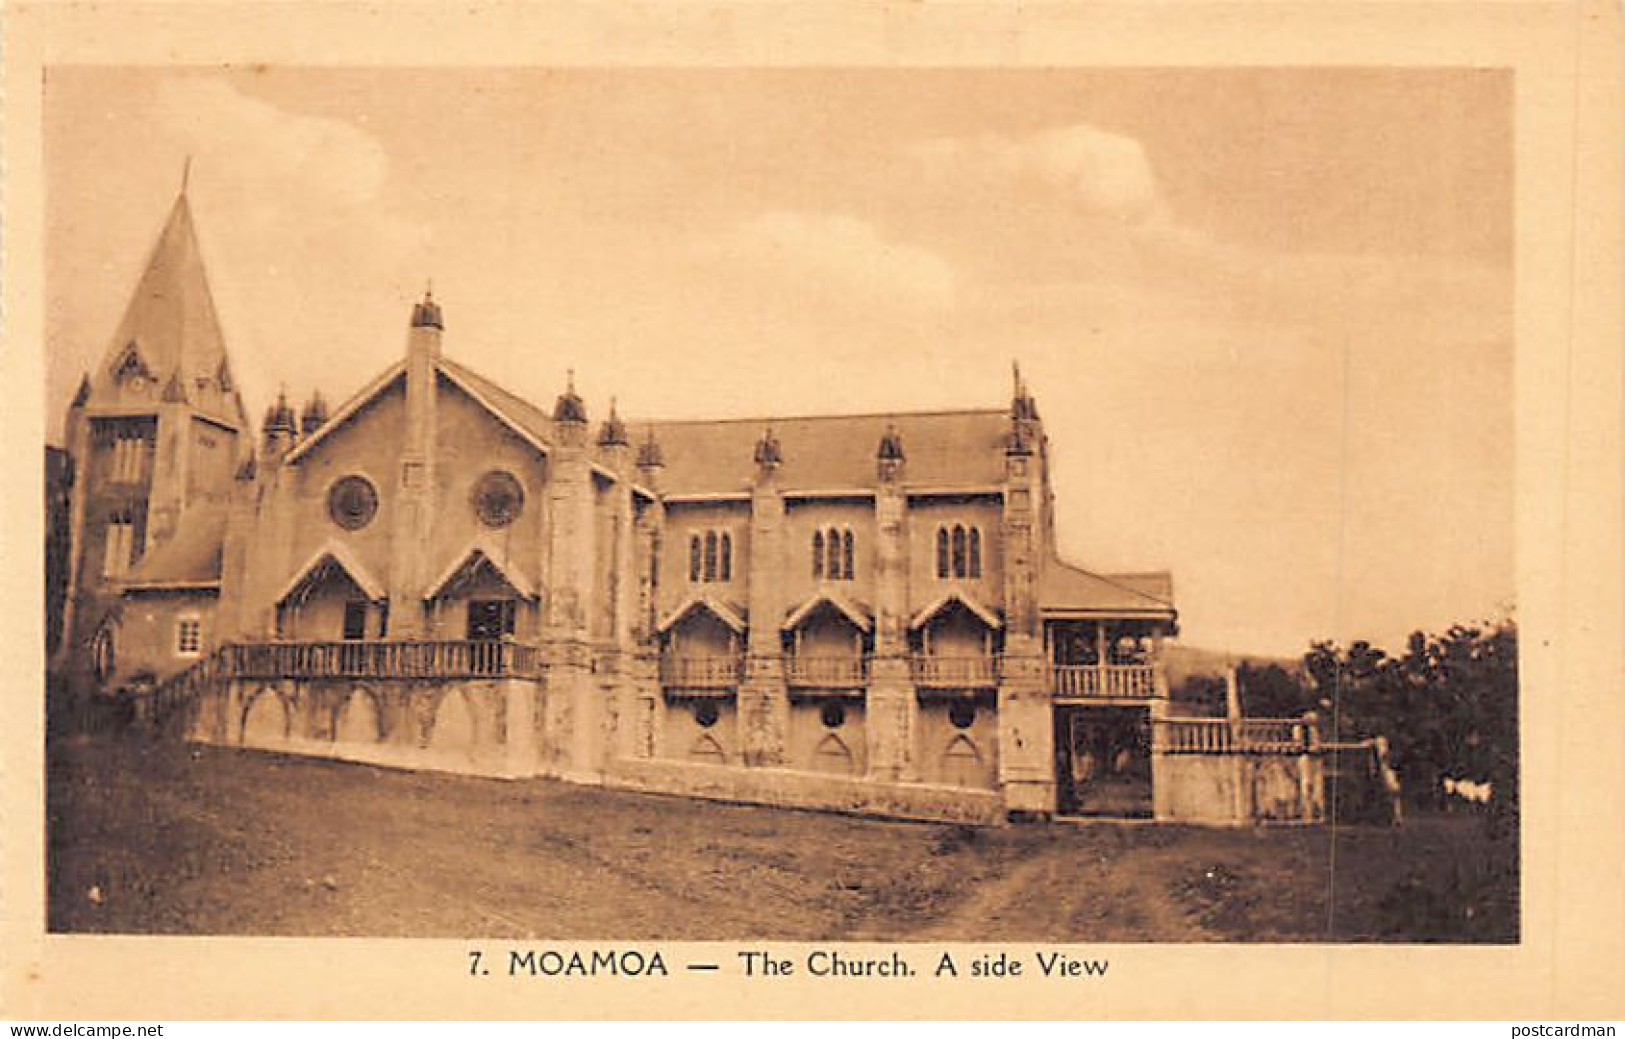 Samoa - MOAMOA - The Church - Side View - Publ. Unknown 7 - Samoa